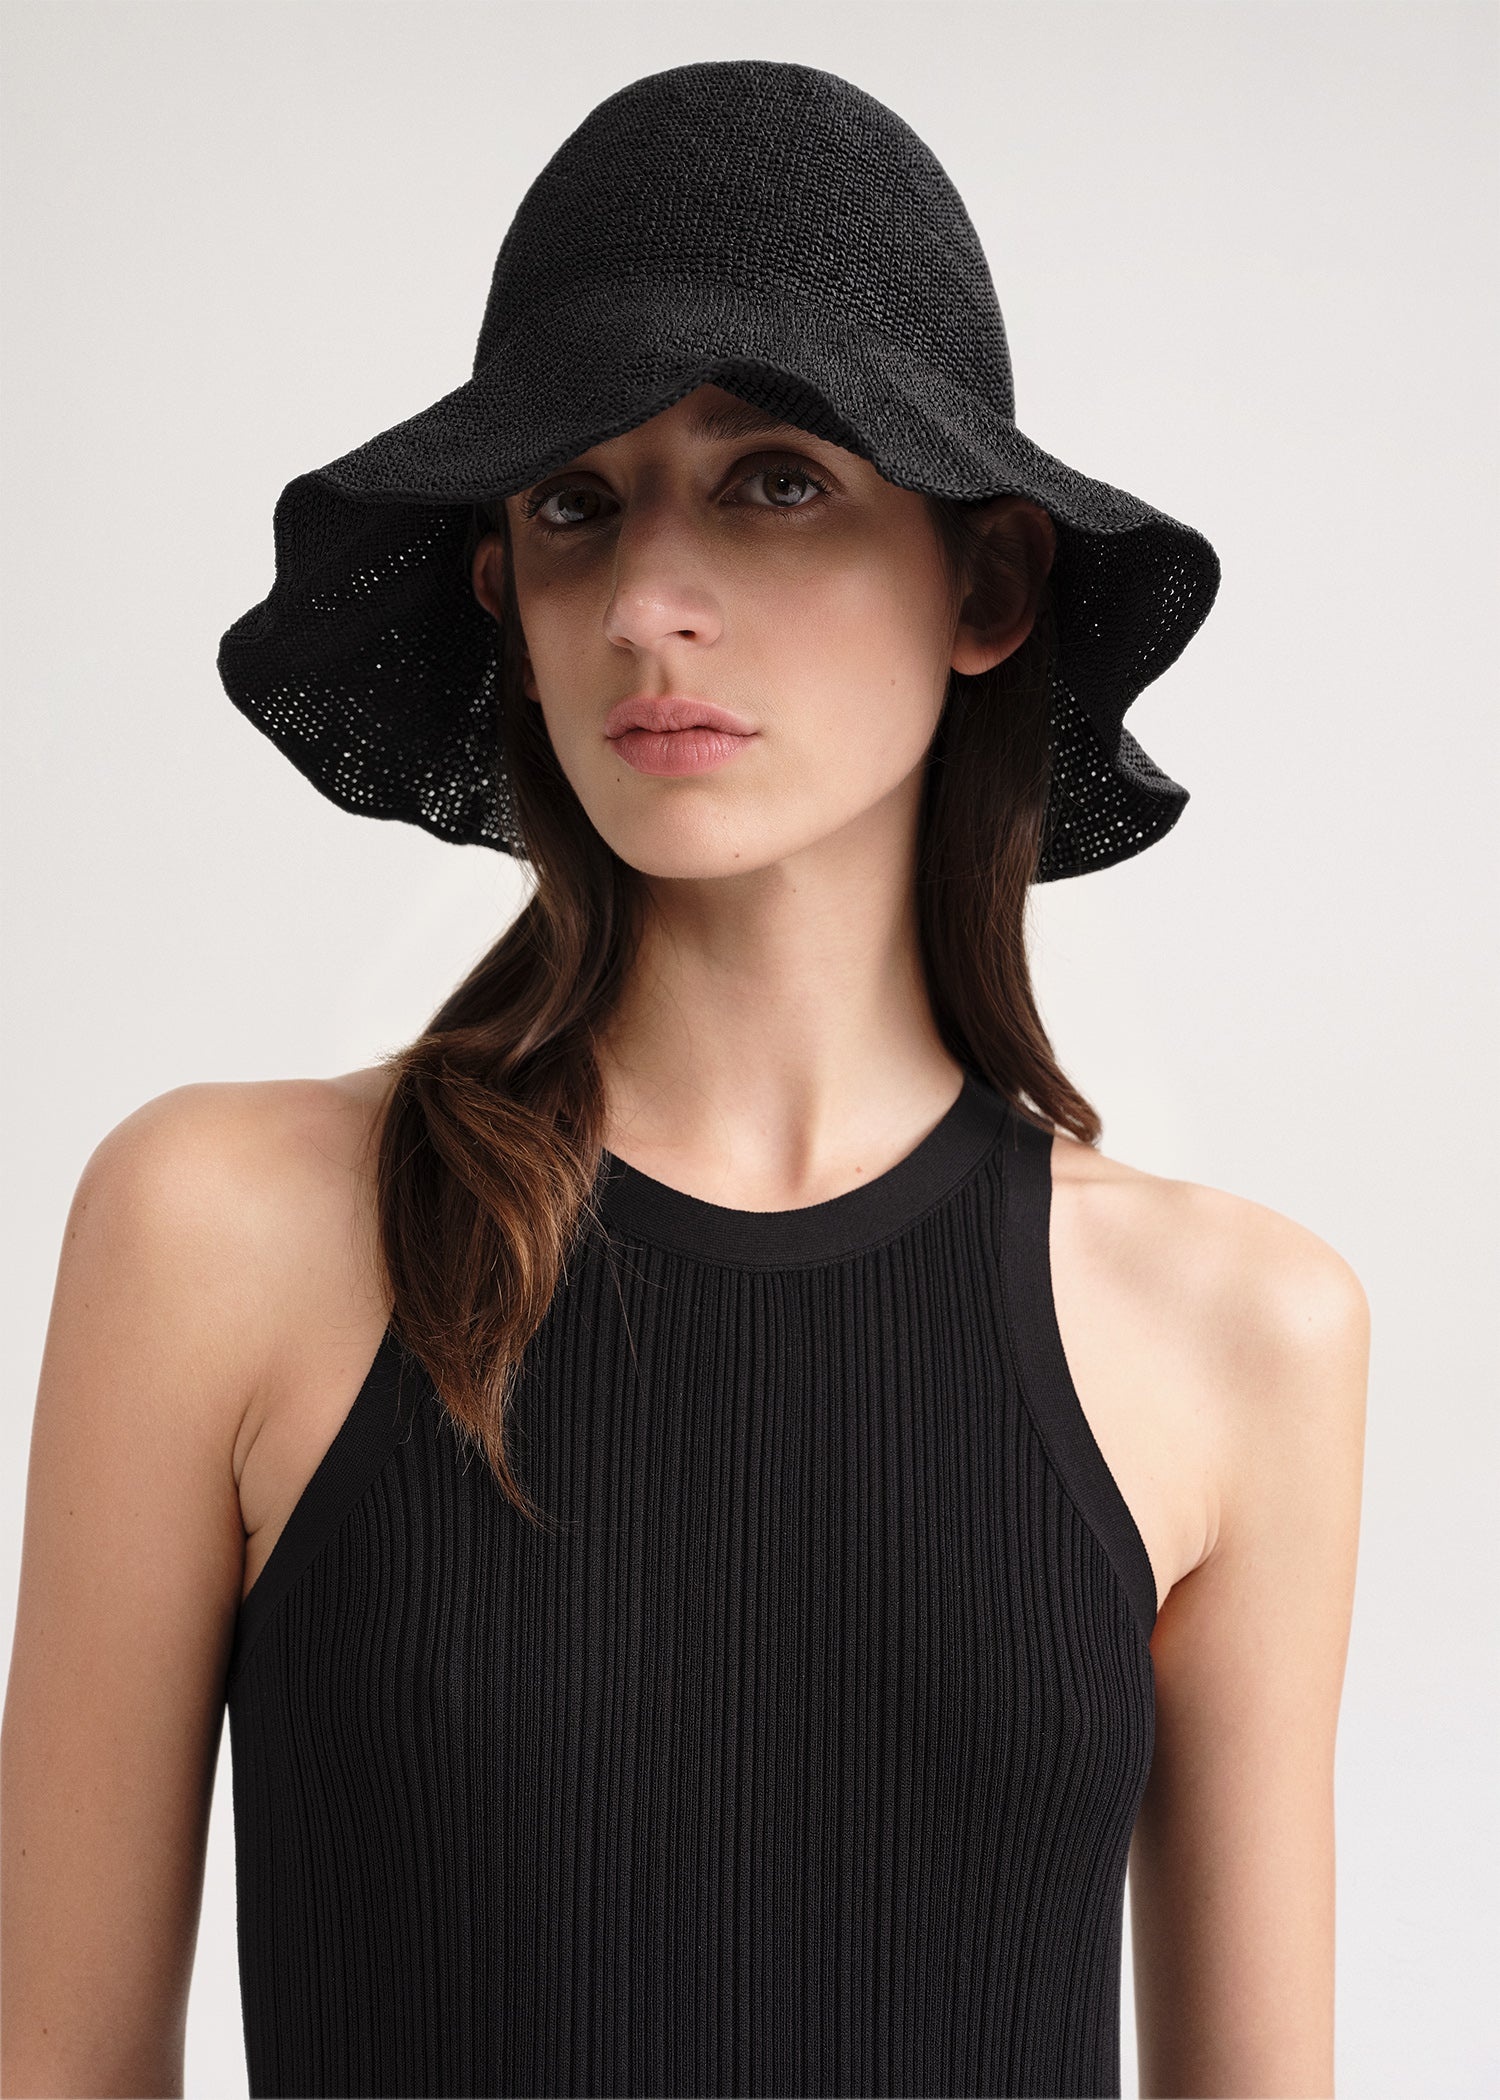 Paper straw hat black - 1